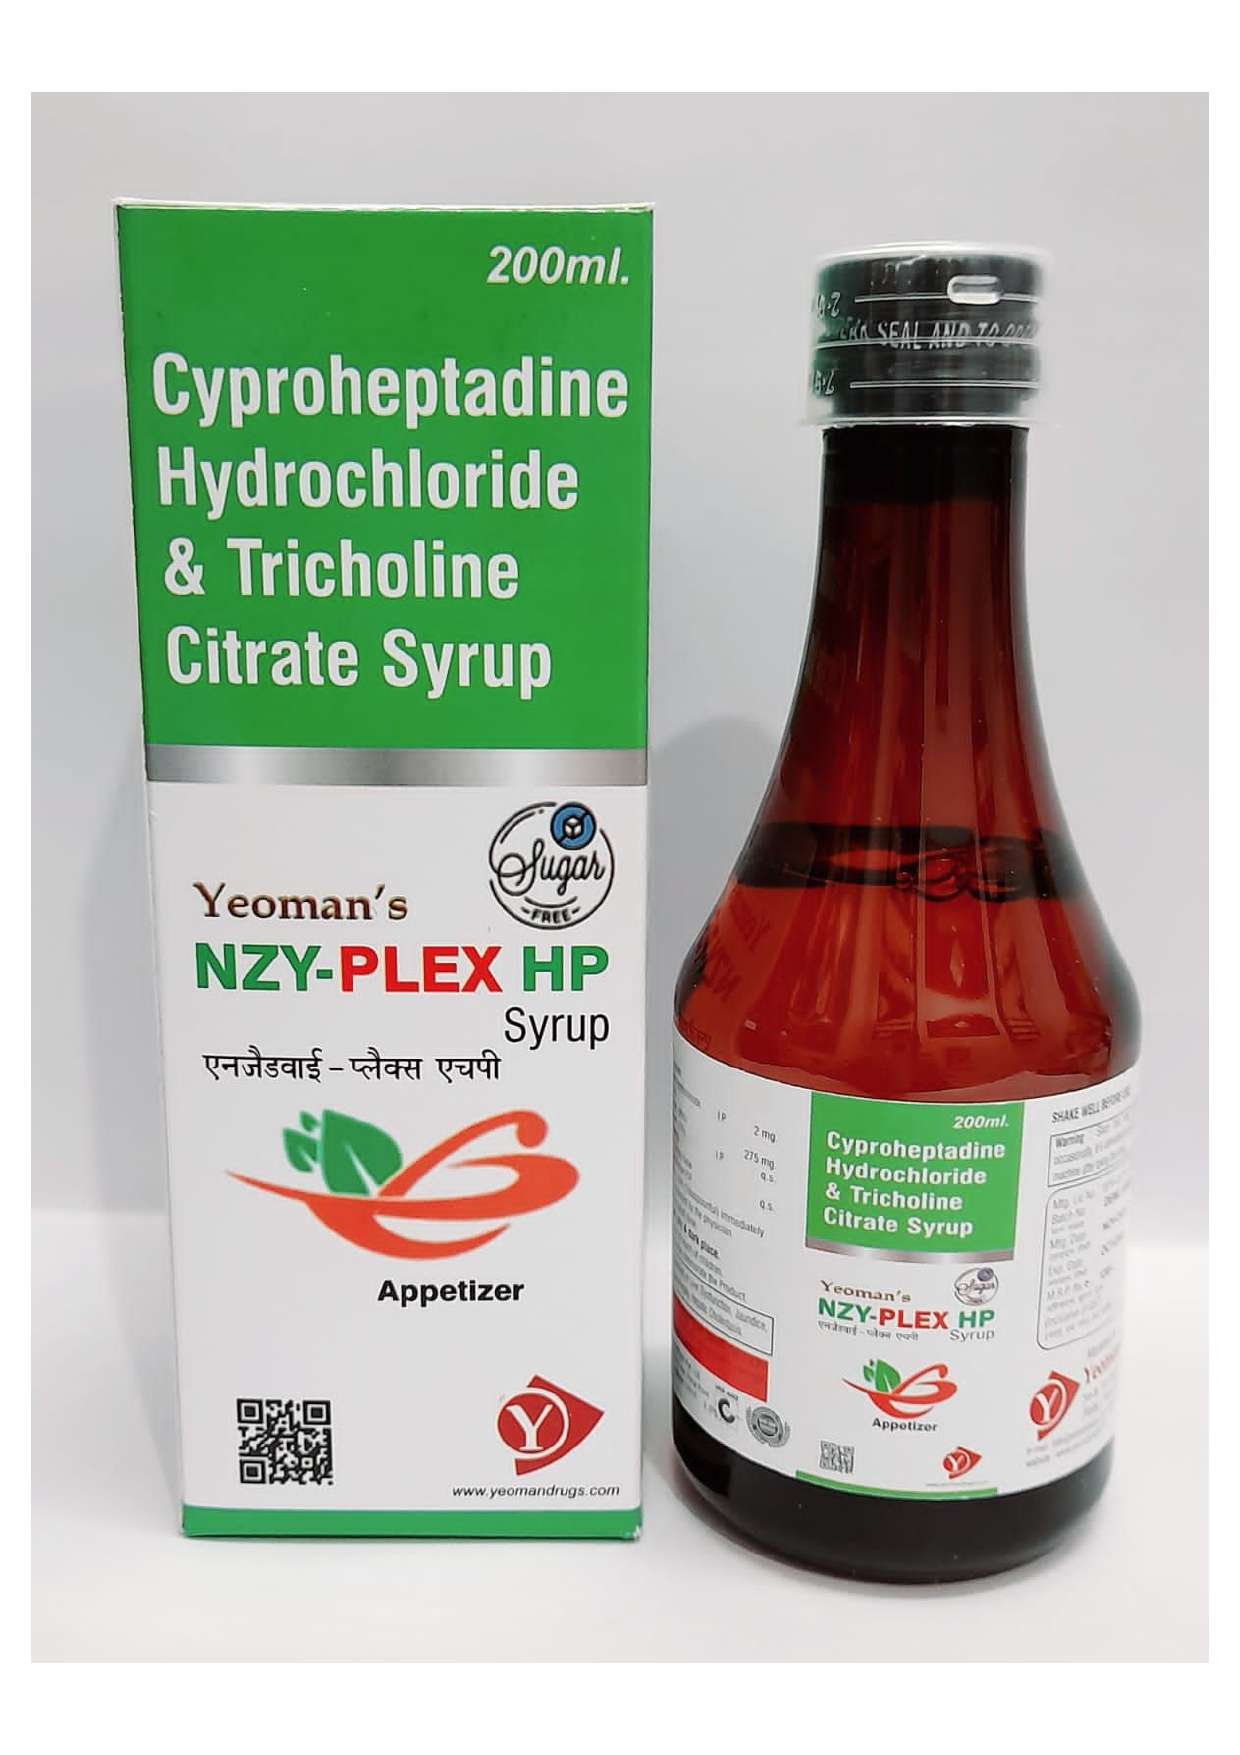 cyproheptadine 2mg. + tricholine 275mg.